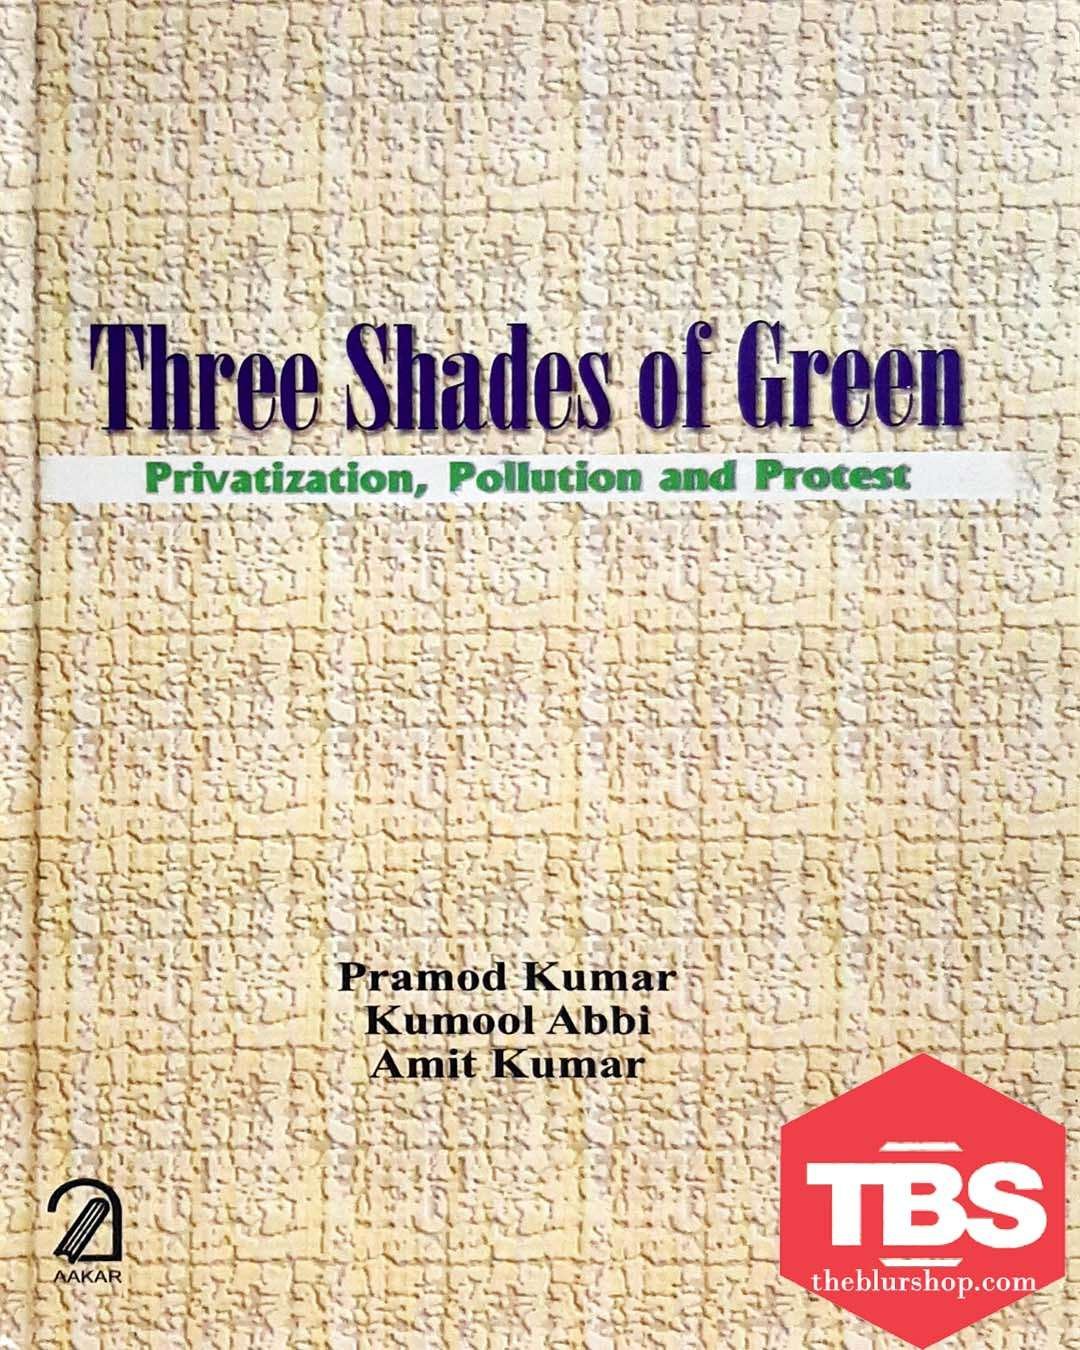 Three Shades of Green